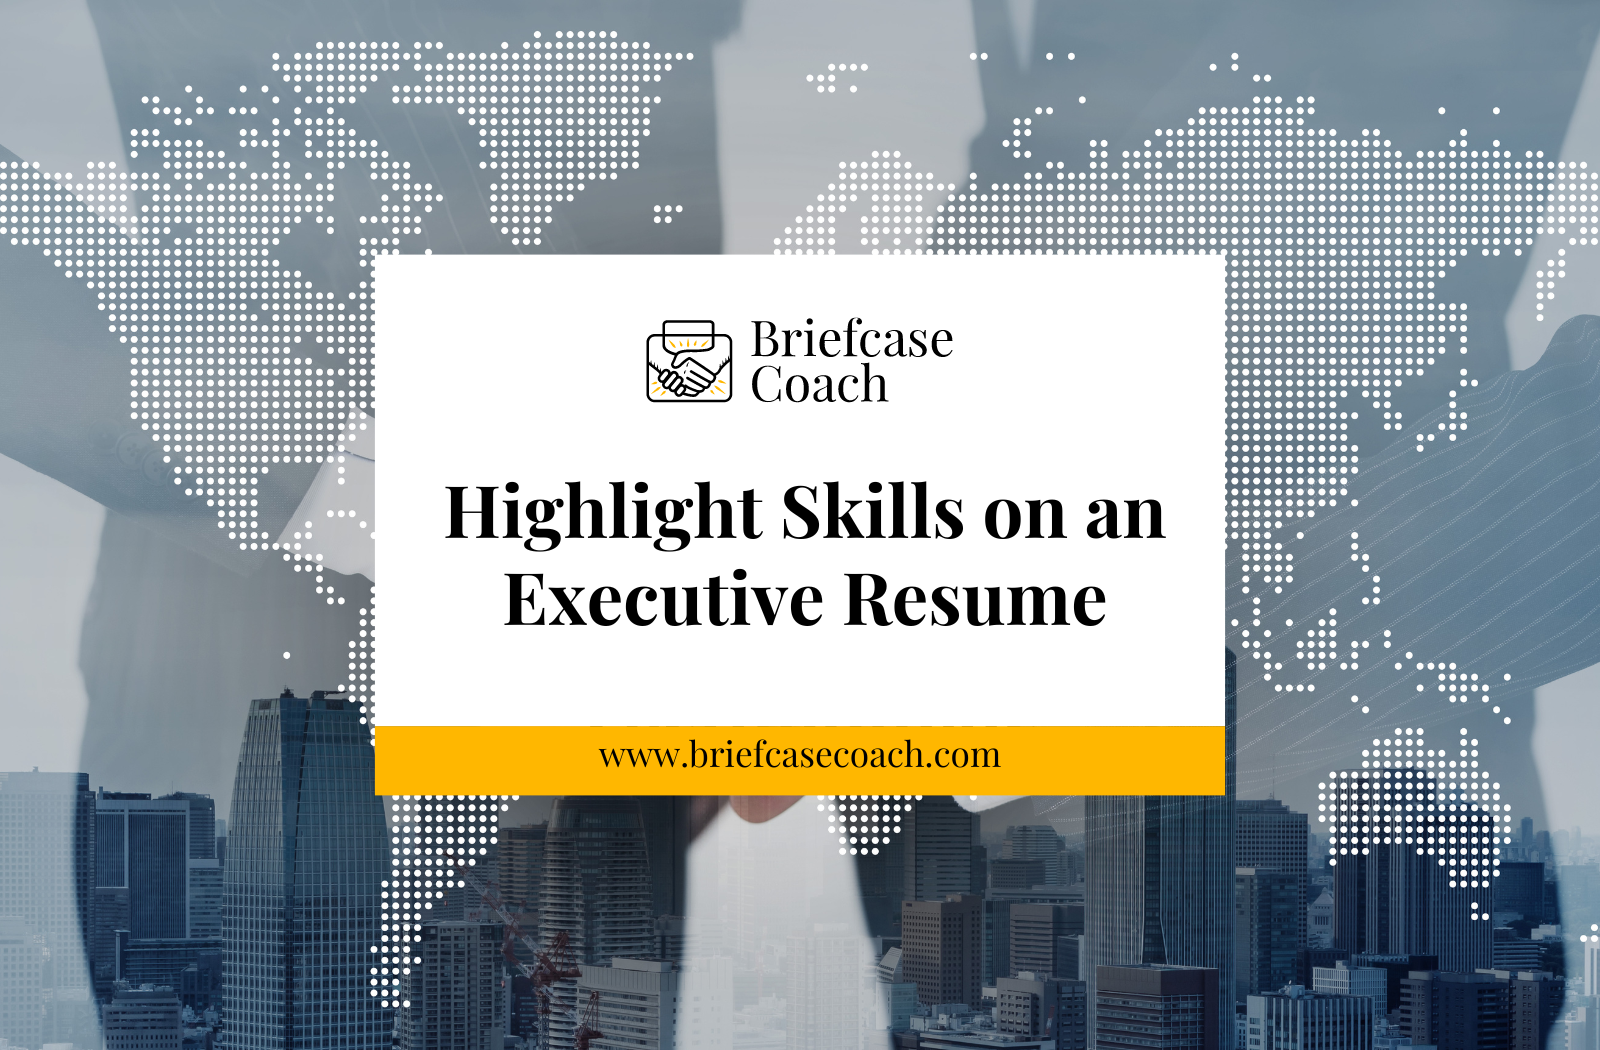 How Do You Highlight Skills on an Executive Resume?